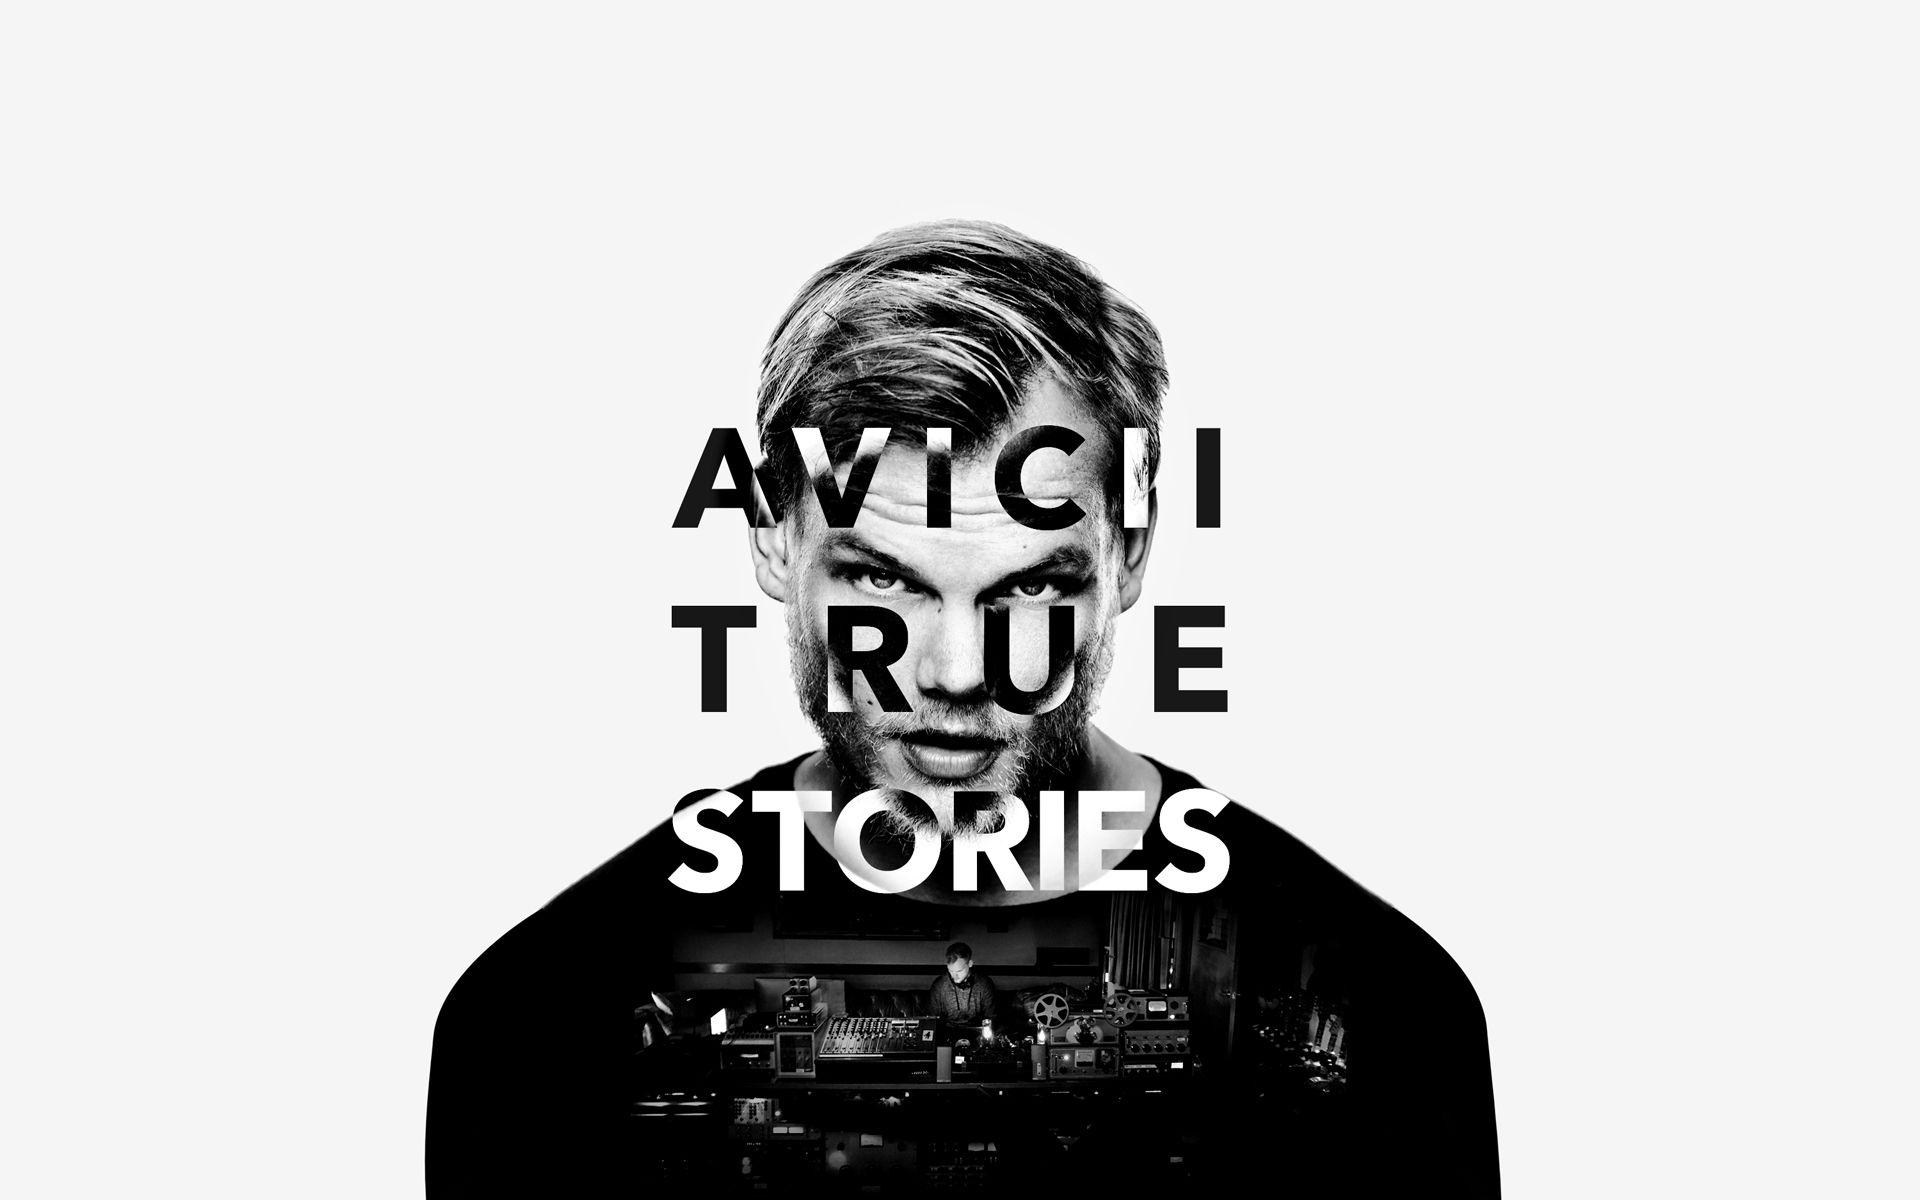 Avicii's Documentary True Stories Will be Available to Stream